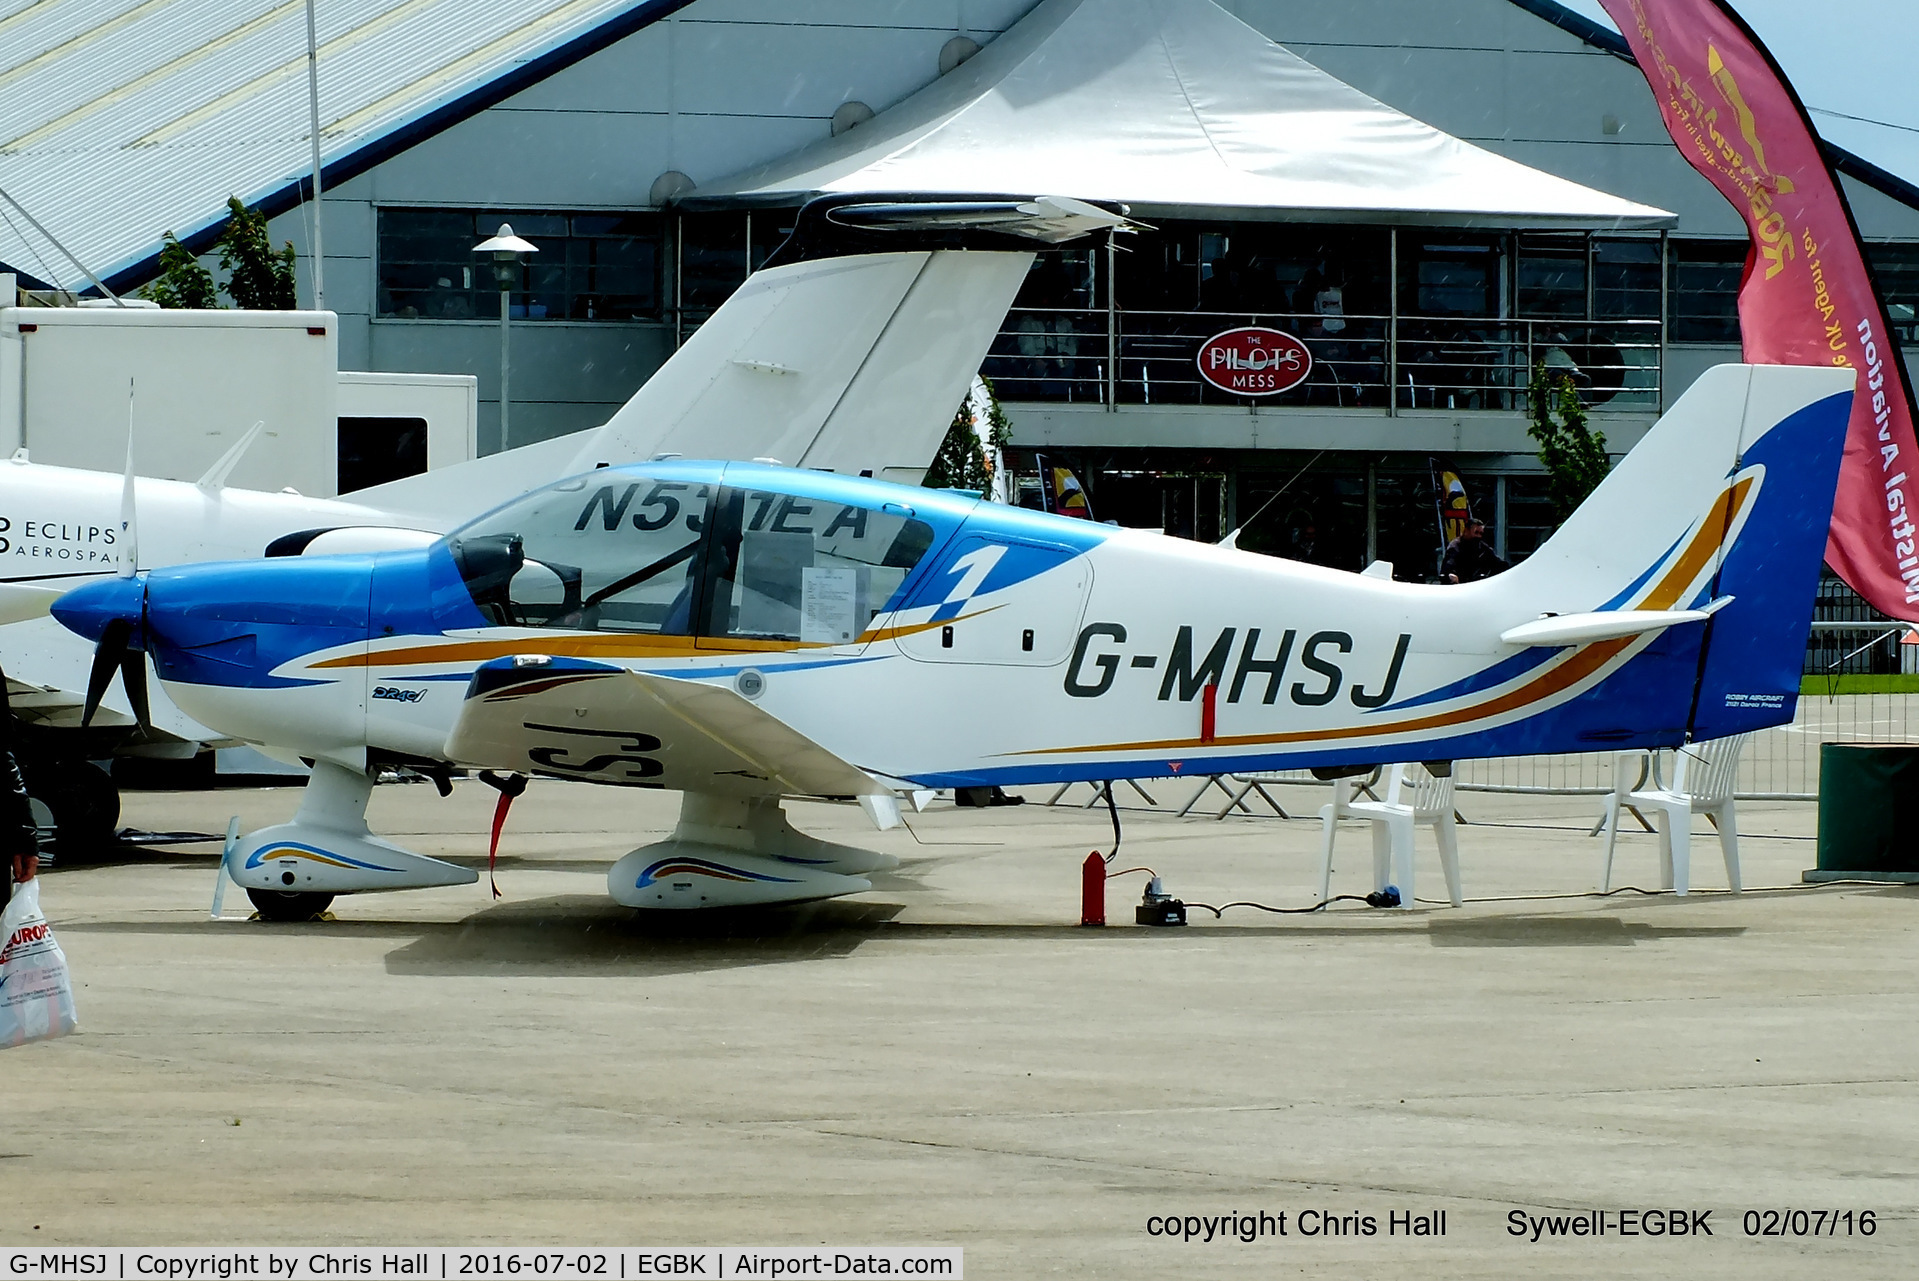 G-MHSJ, 2015 Robin DR-400-140B Major C/N 2682, at Aeroexpo 2016